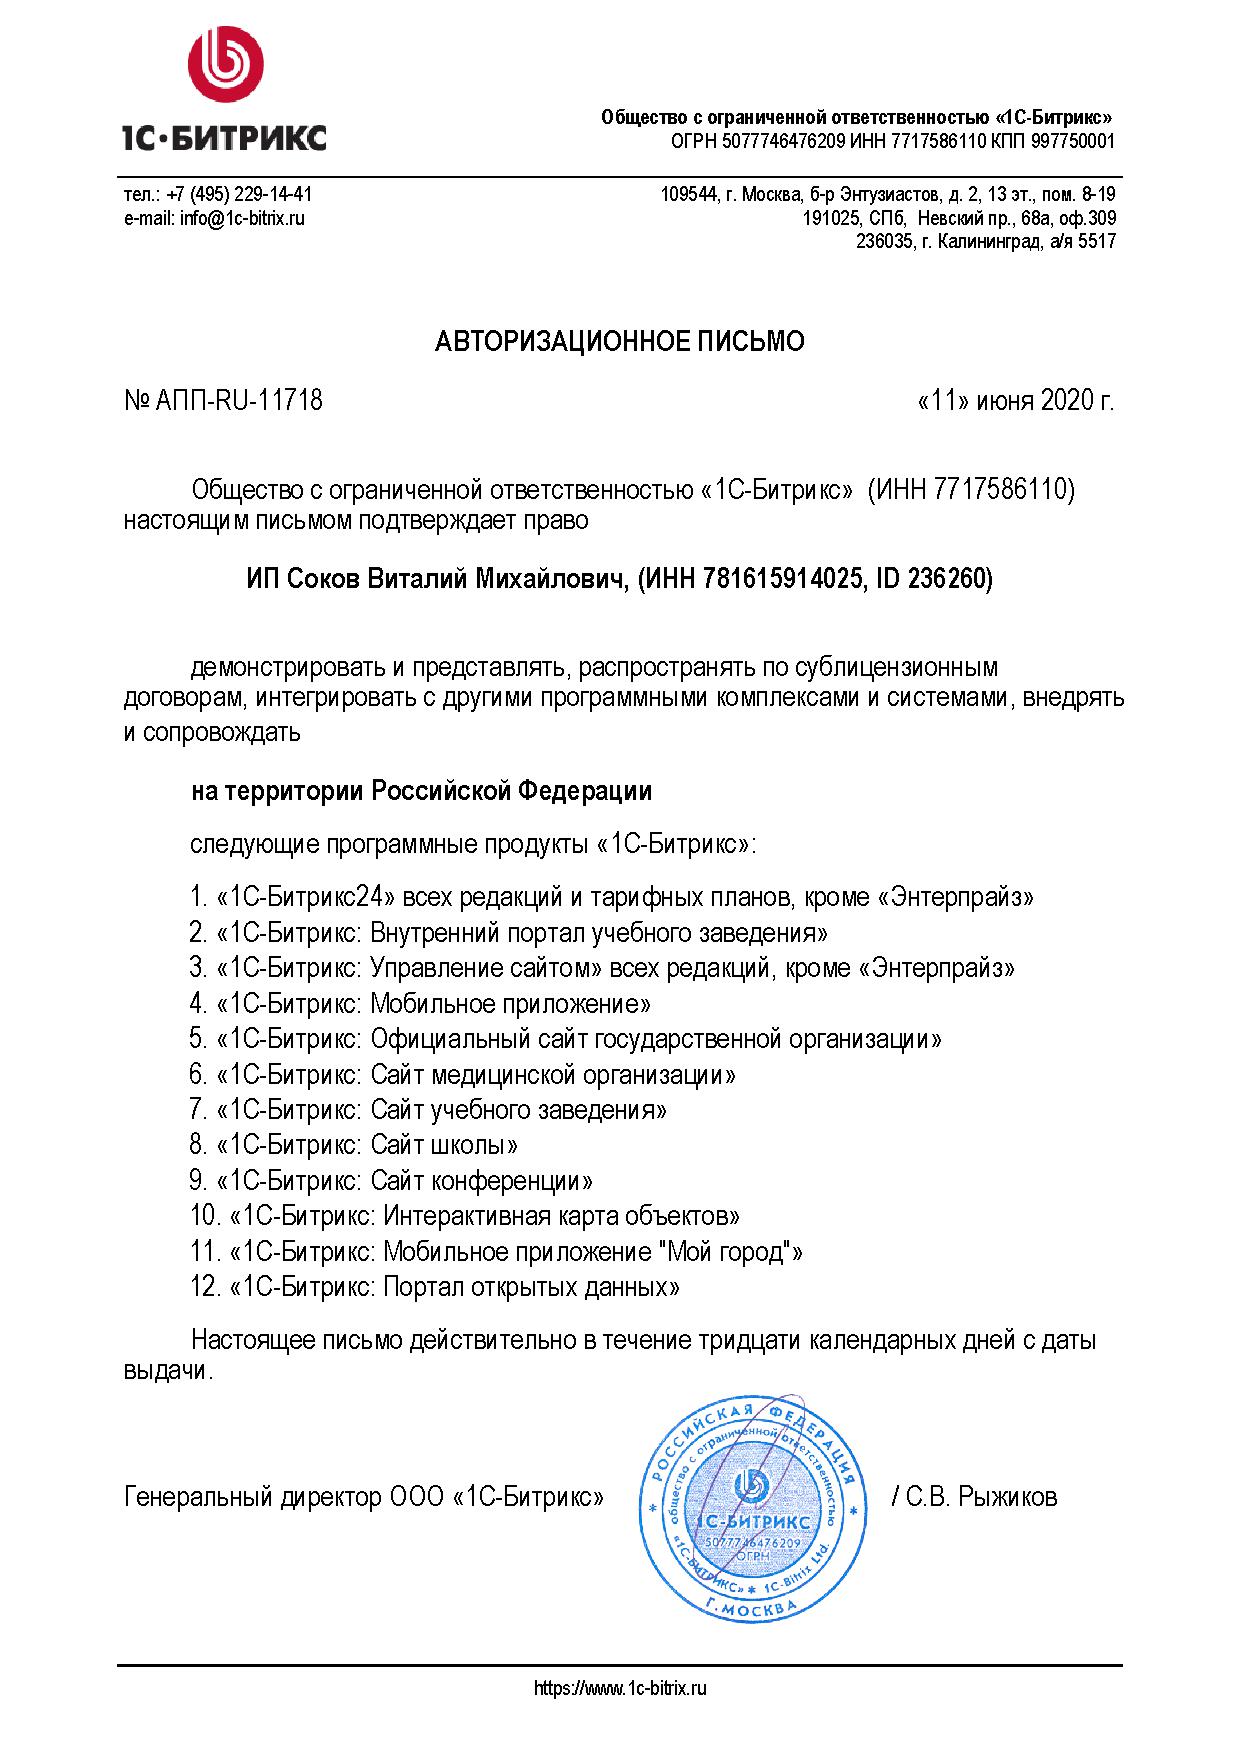 Авторизационное письмо ИП Соков Виталий Михайлович, (ИНН 781615914025, ID 236260)